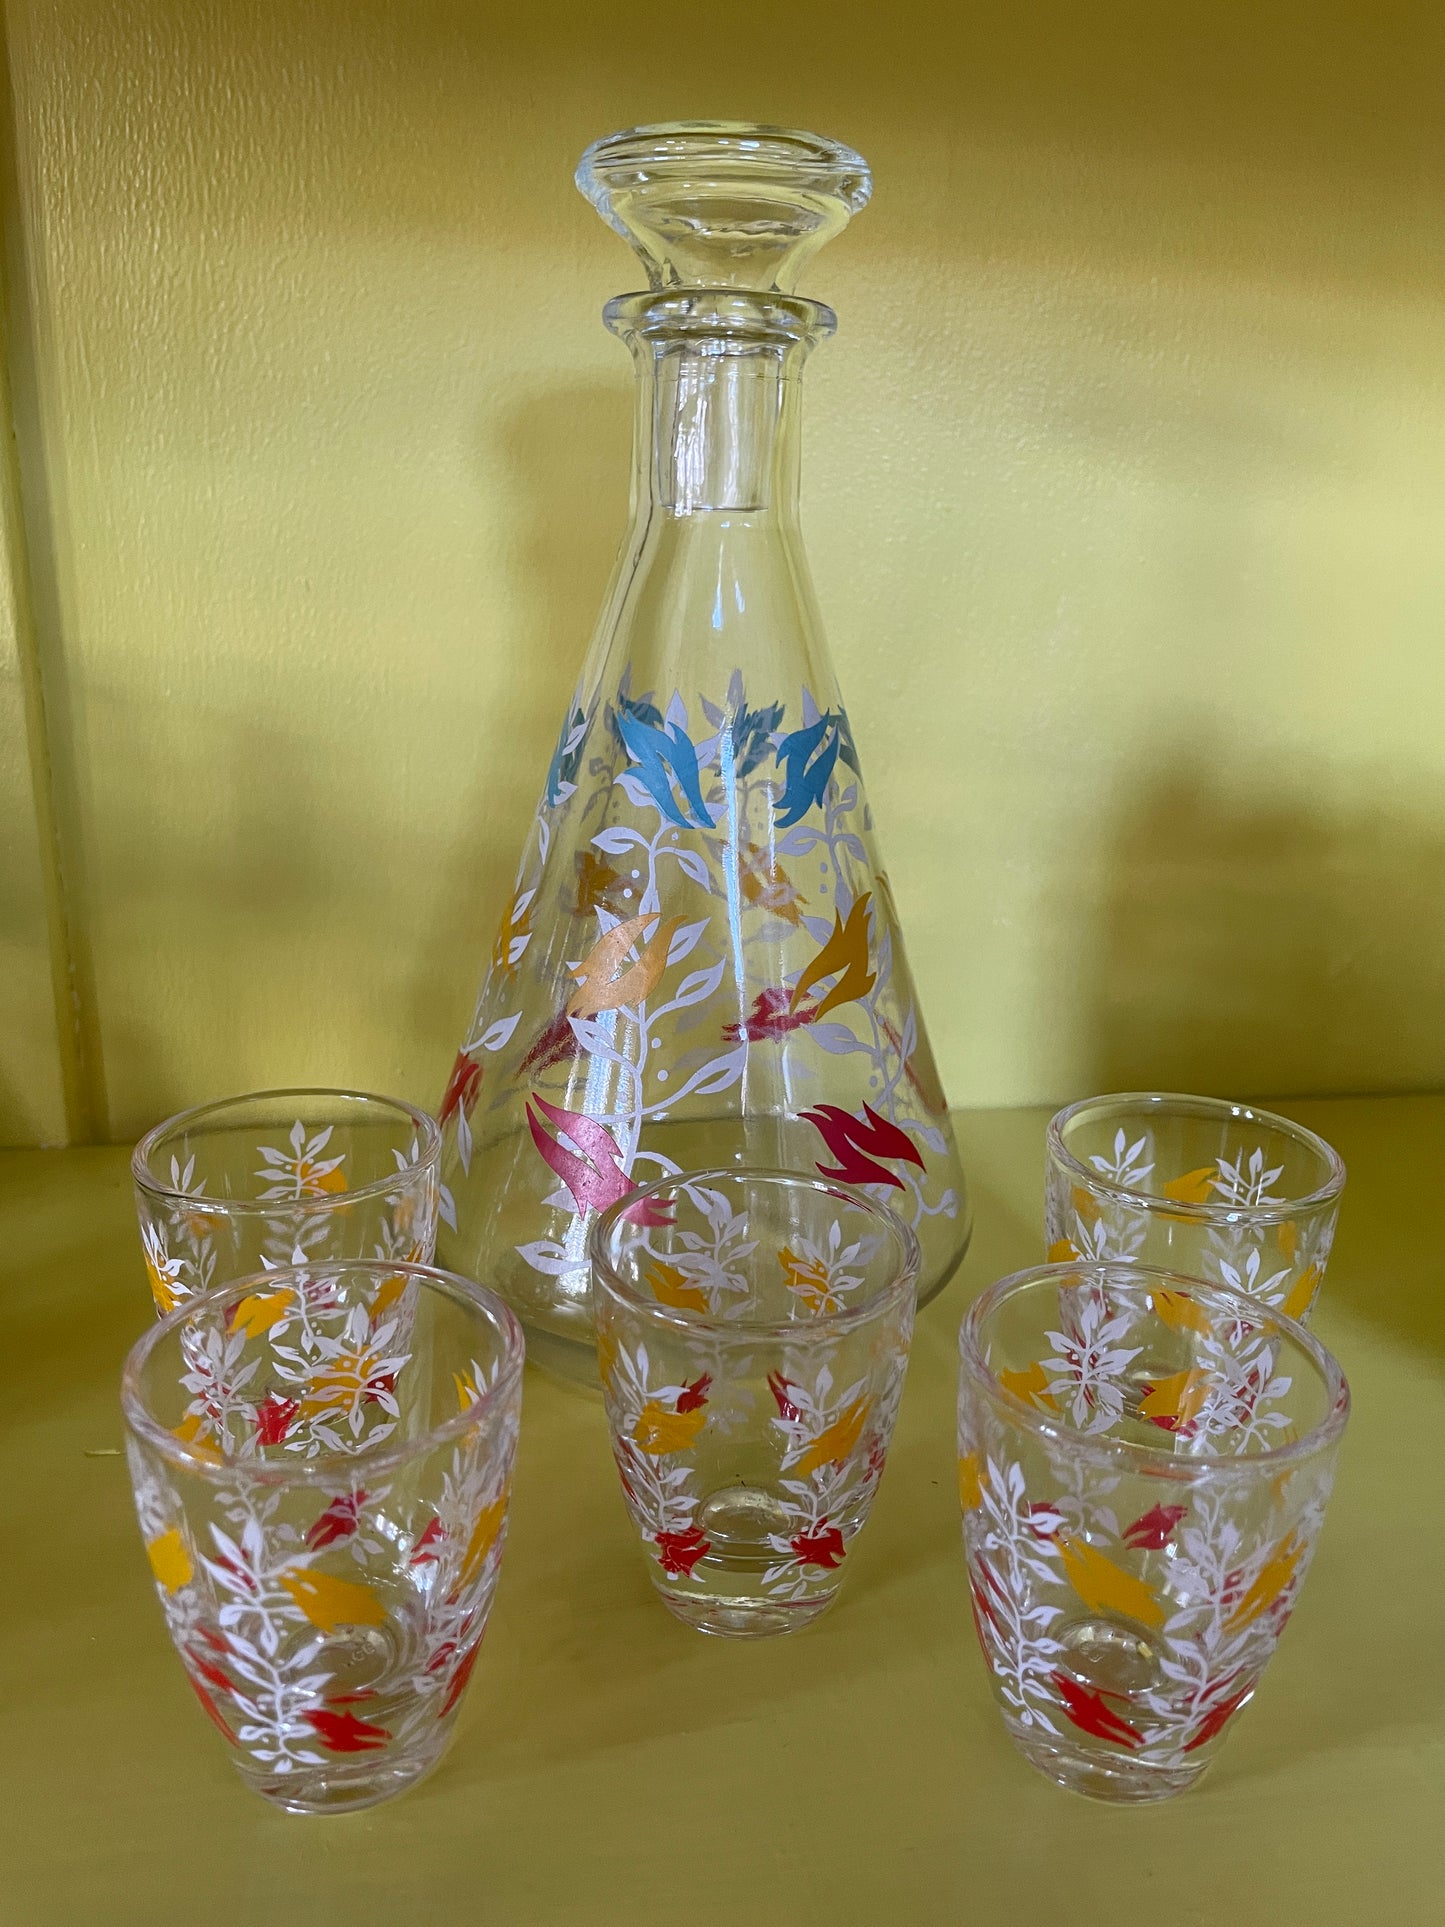 Decanter and set of x5 shot glasses - floral design